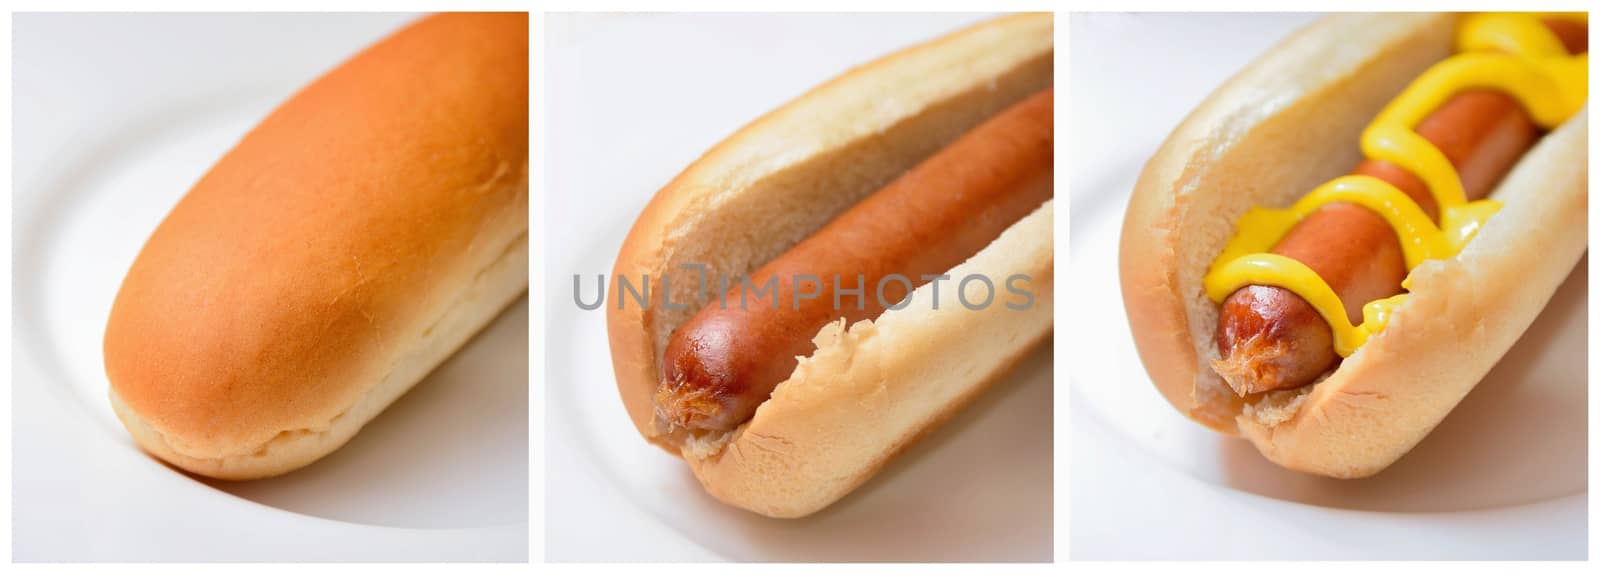 Hot dog photo collage by hamik